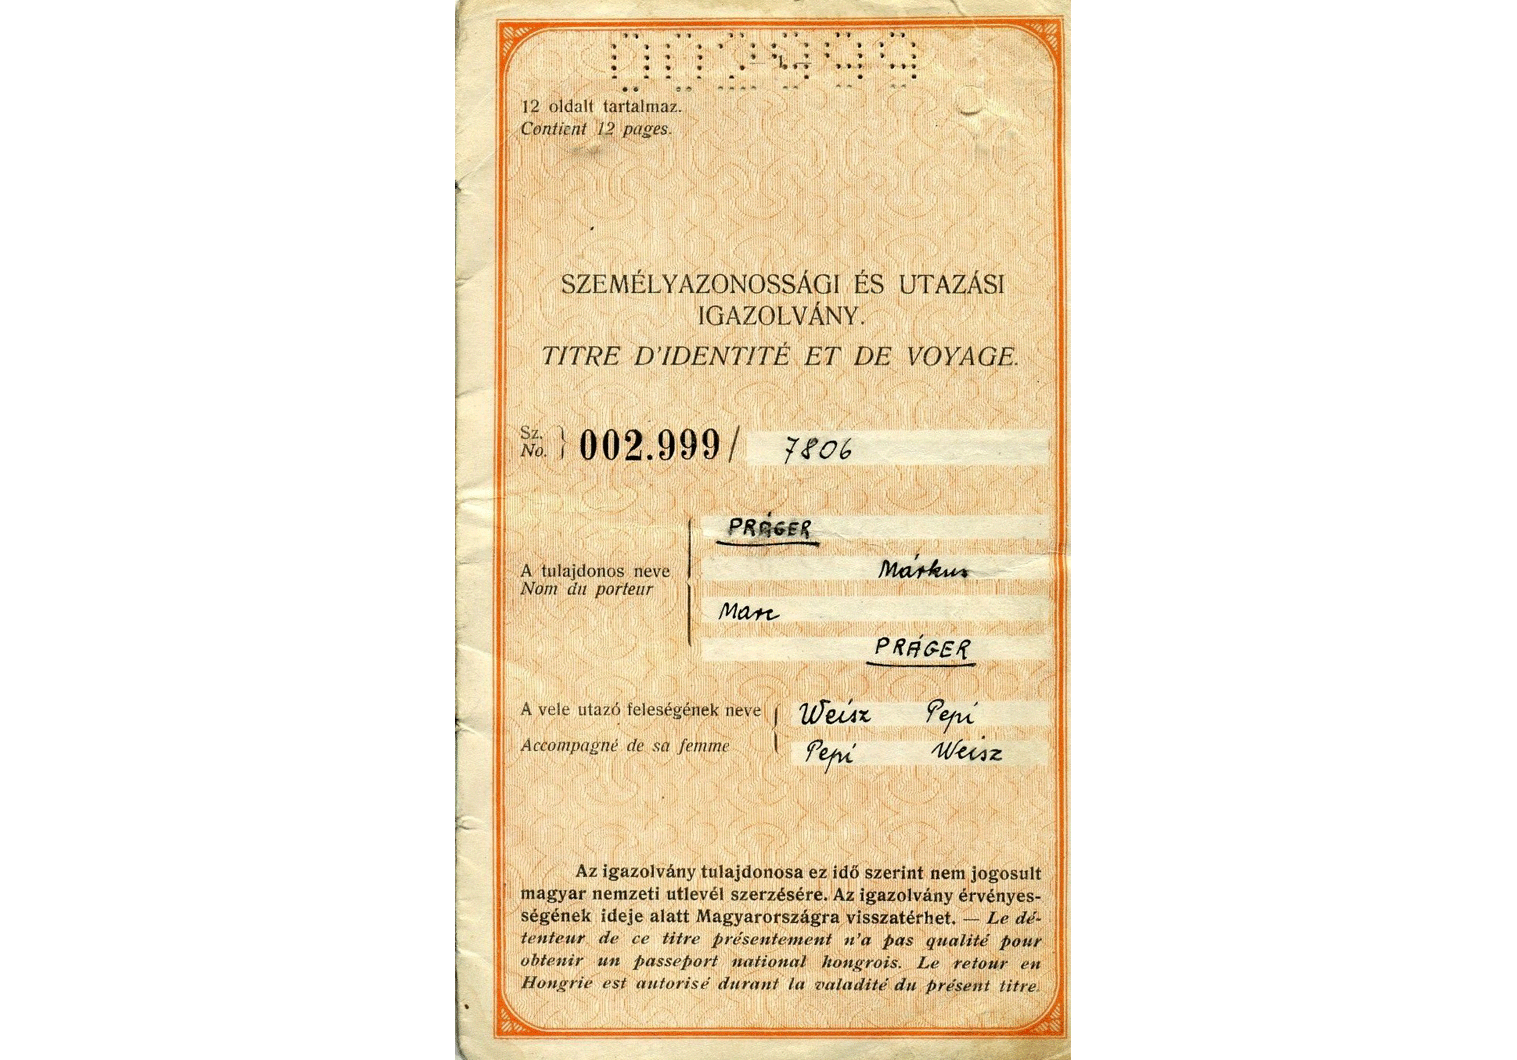 WW2 Special temporary travel document